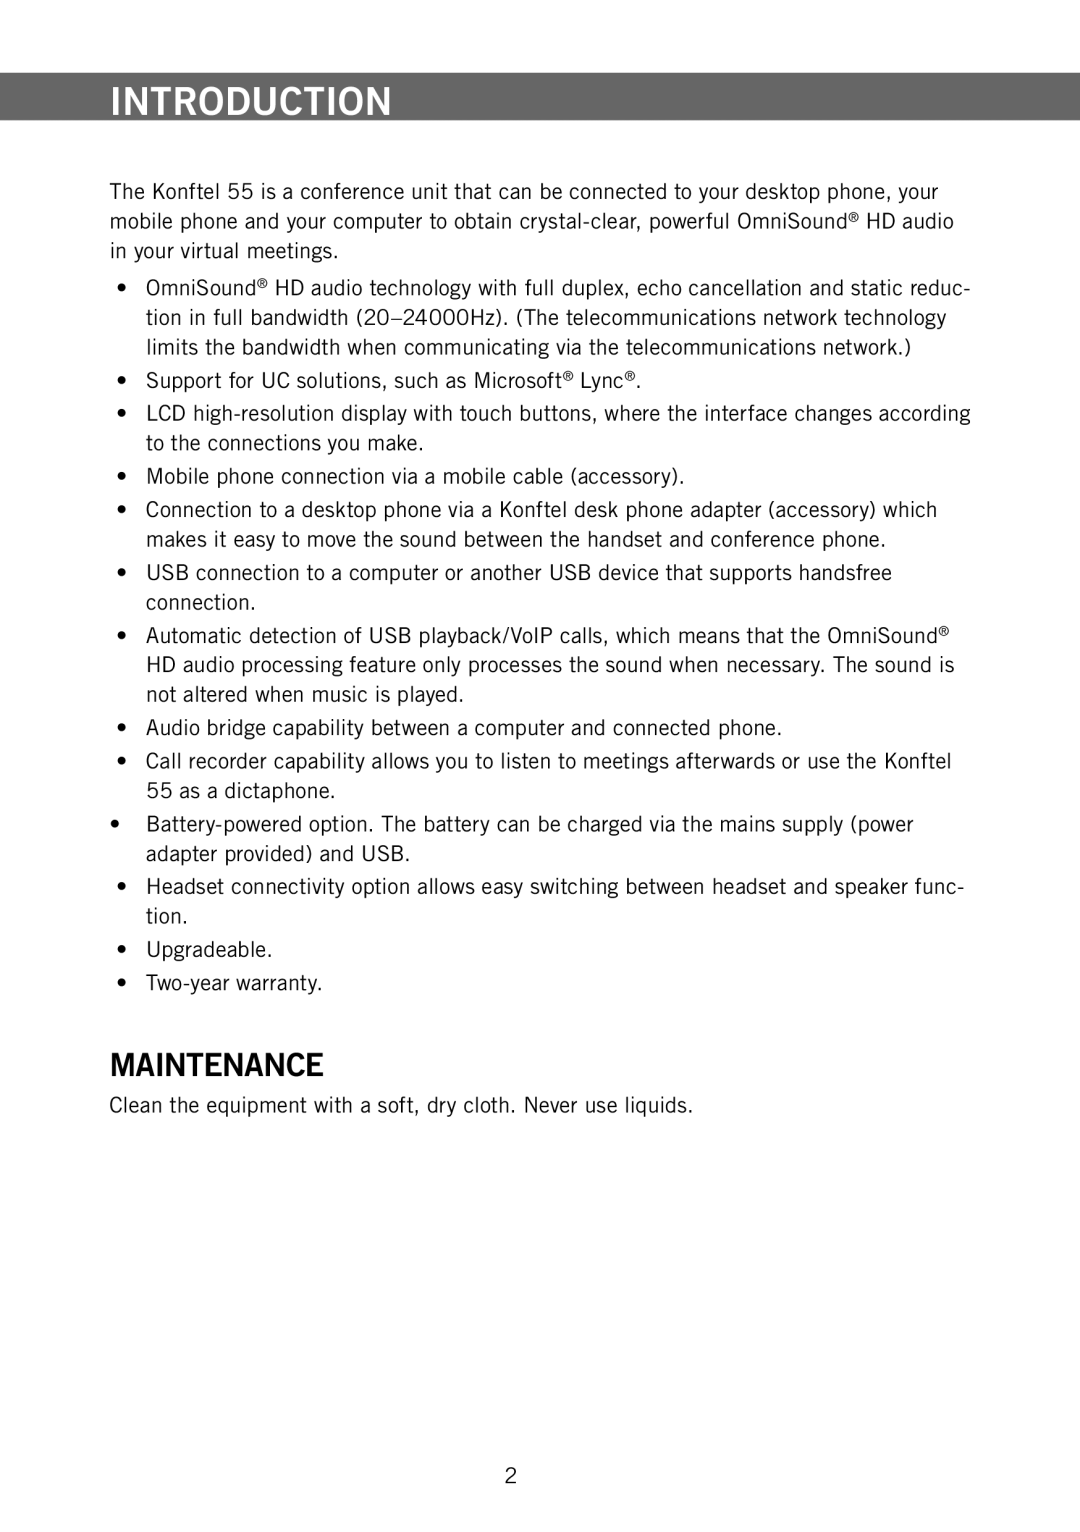 Konftel 55 manual Introduction, Maintenance 